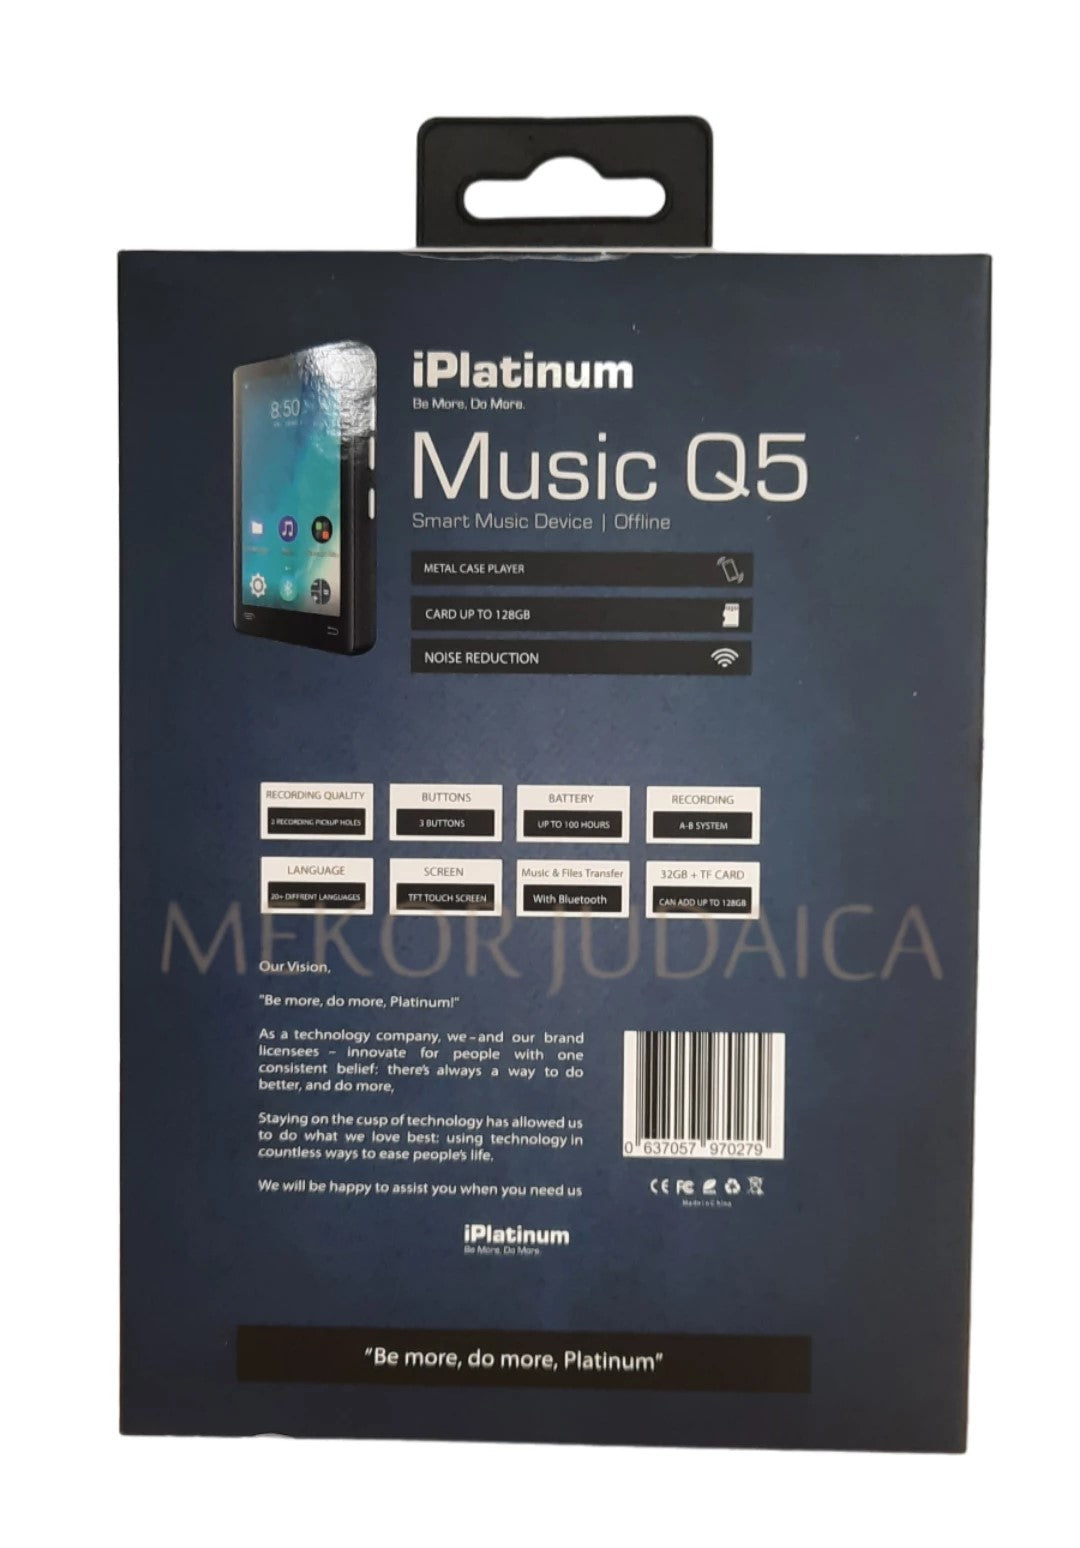 Samvix IPlantinum Music Q5 MP3 Player